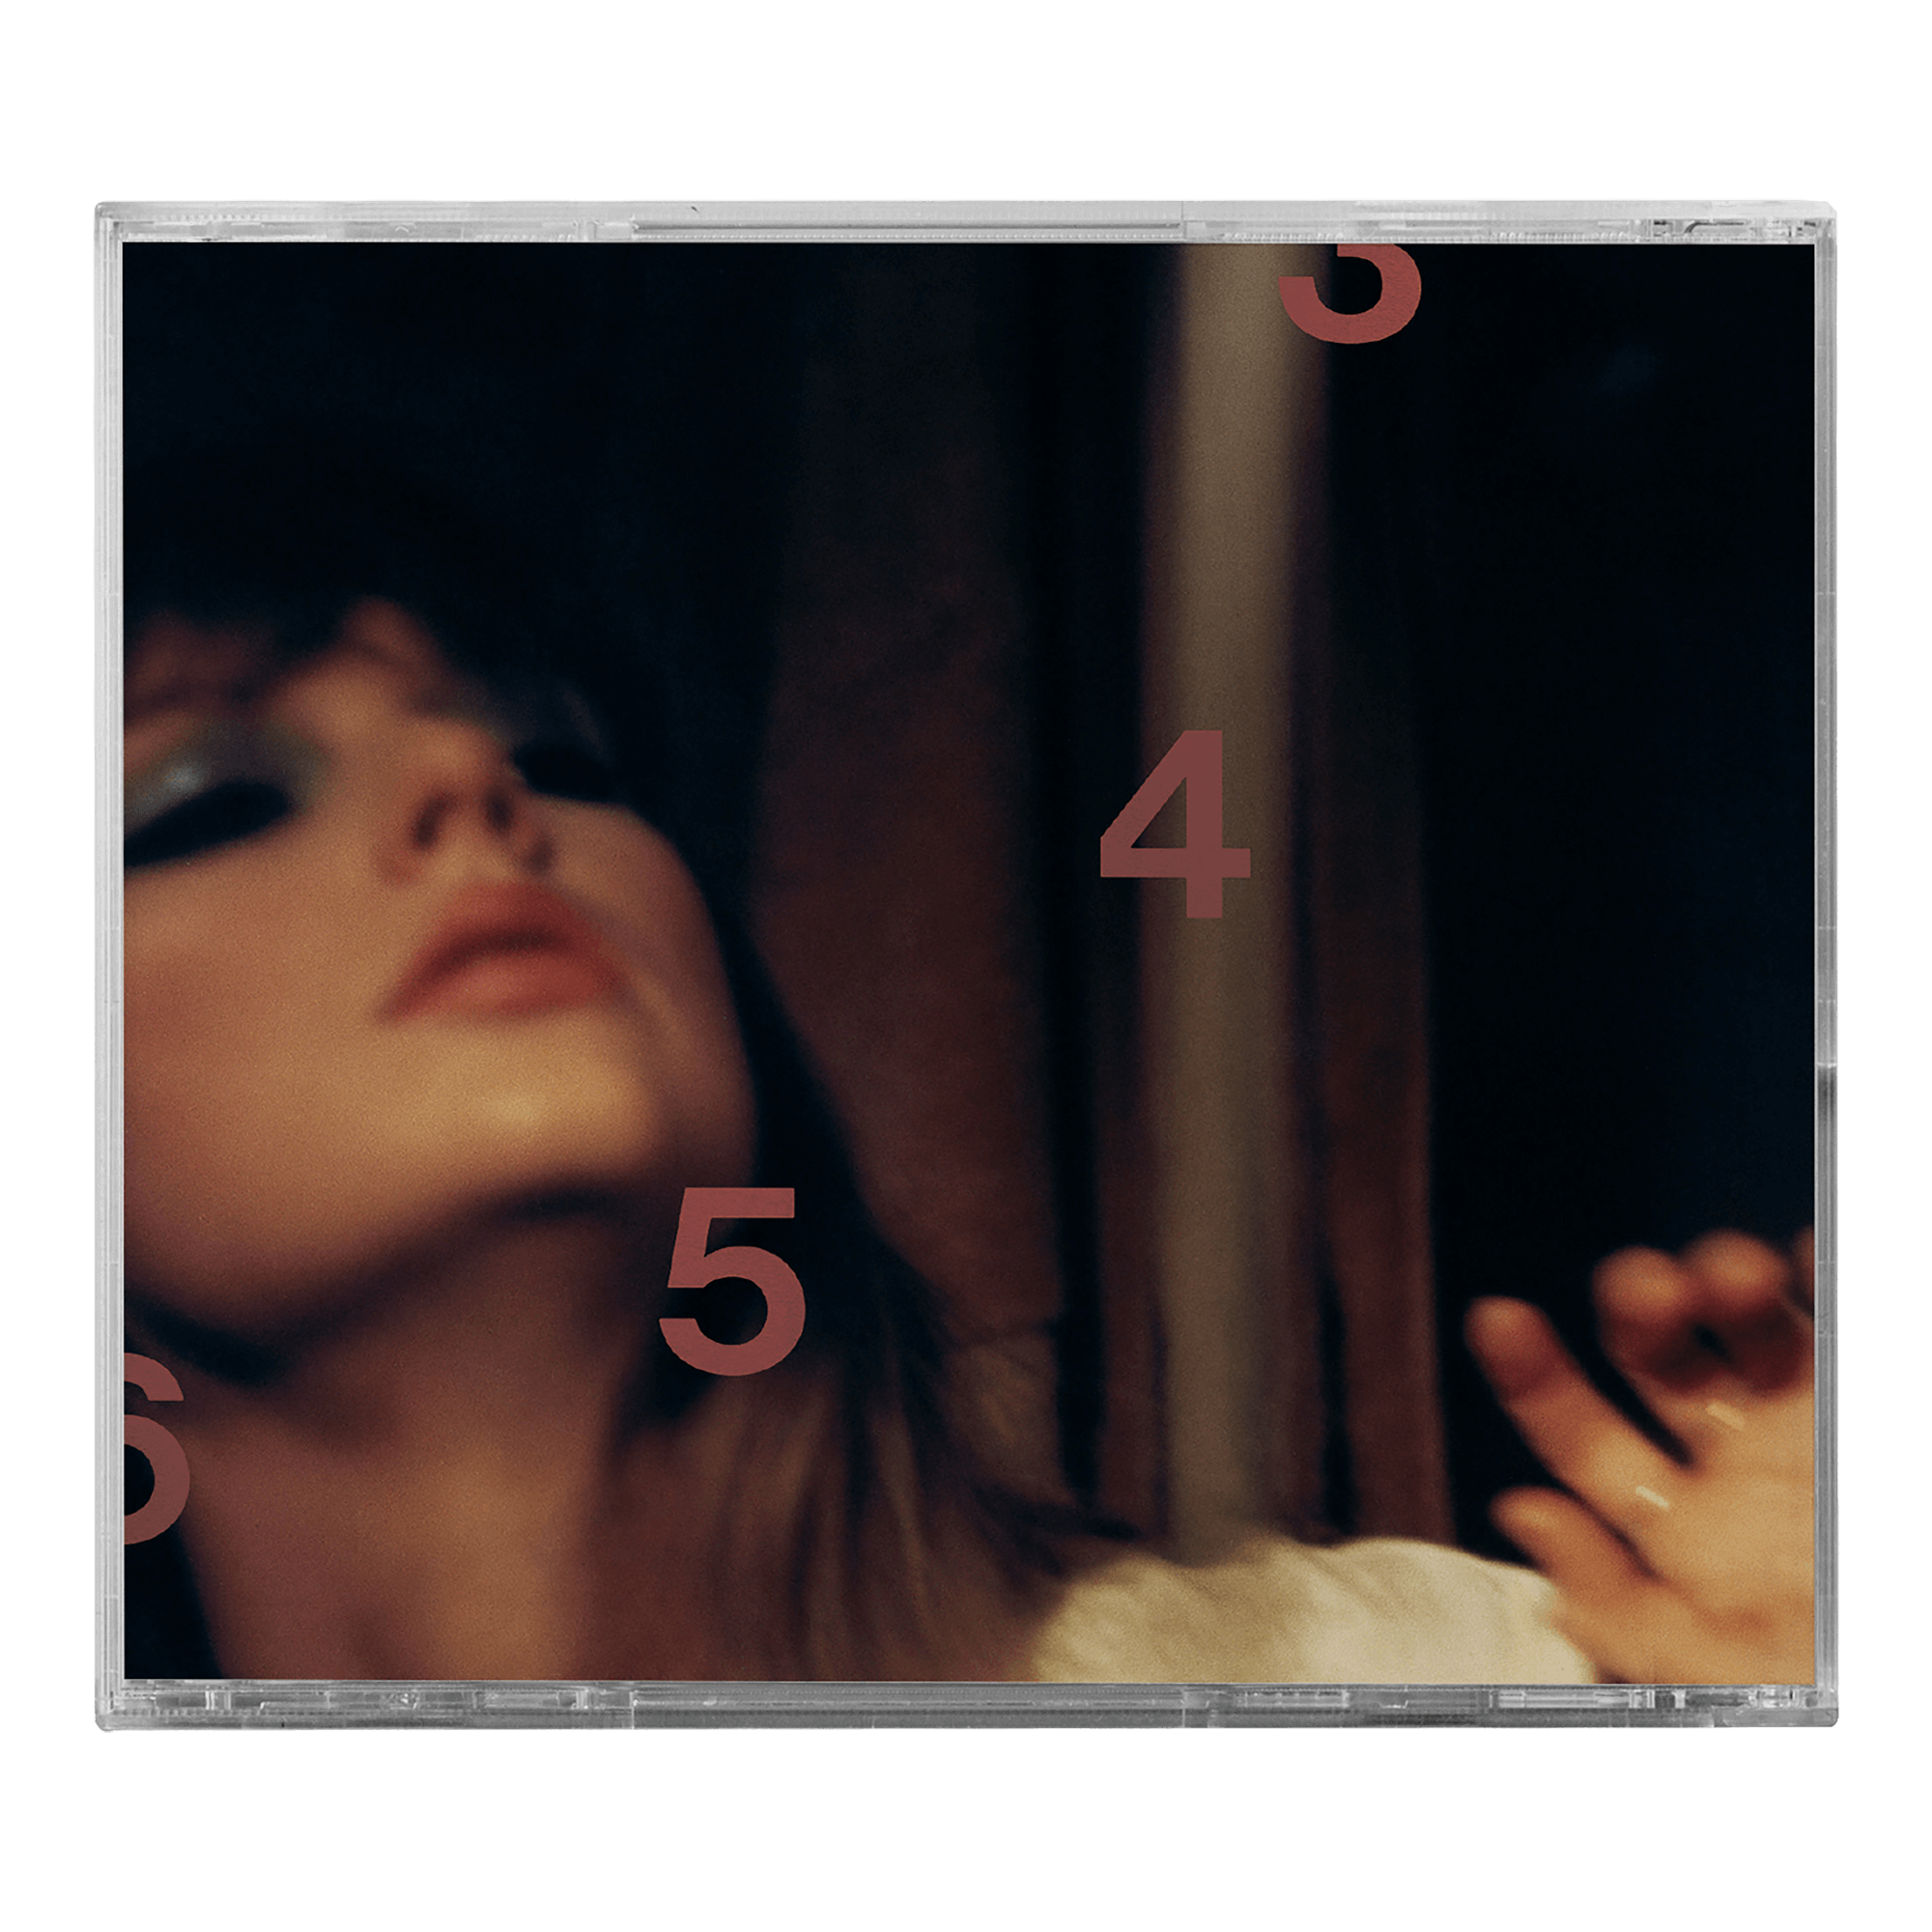 Taylor Swift - Midnights: Blood Moon Edition CD